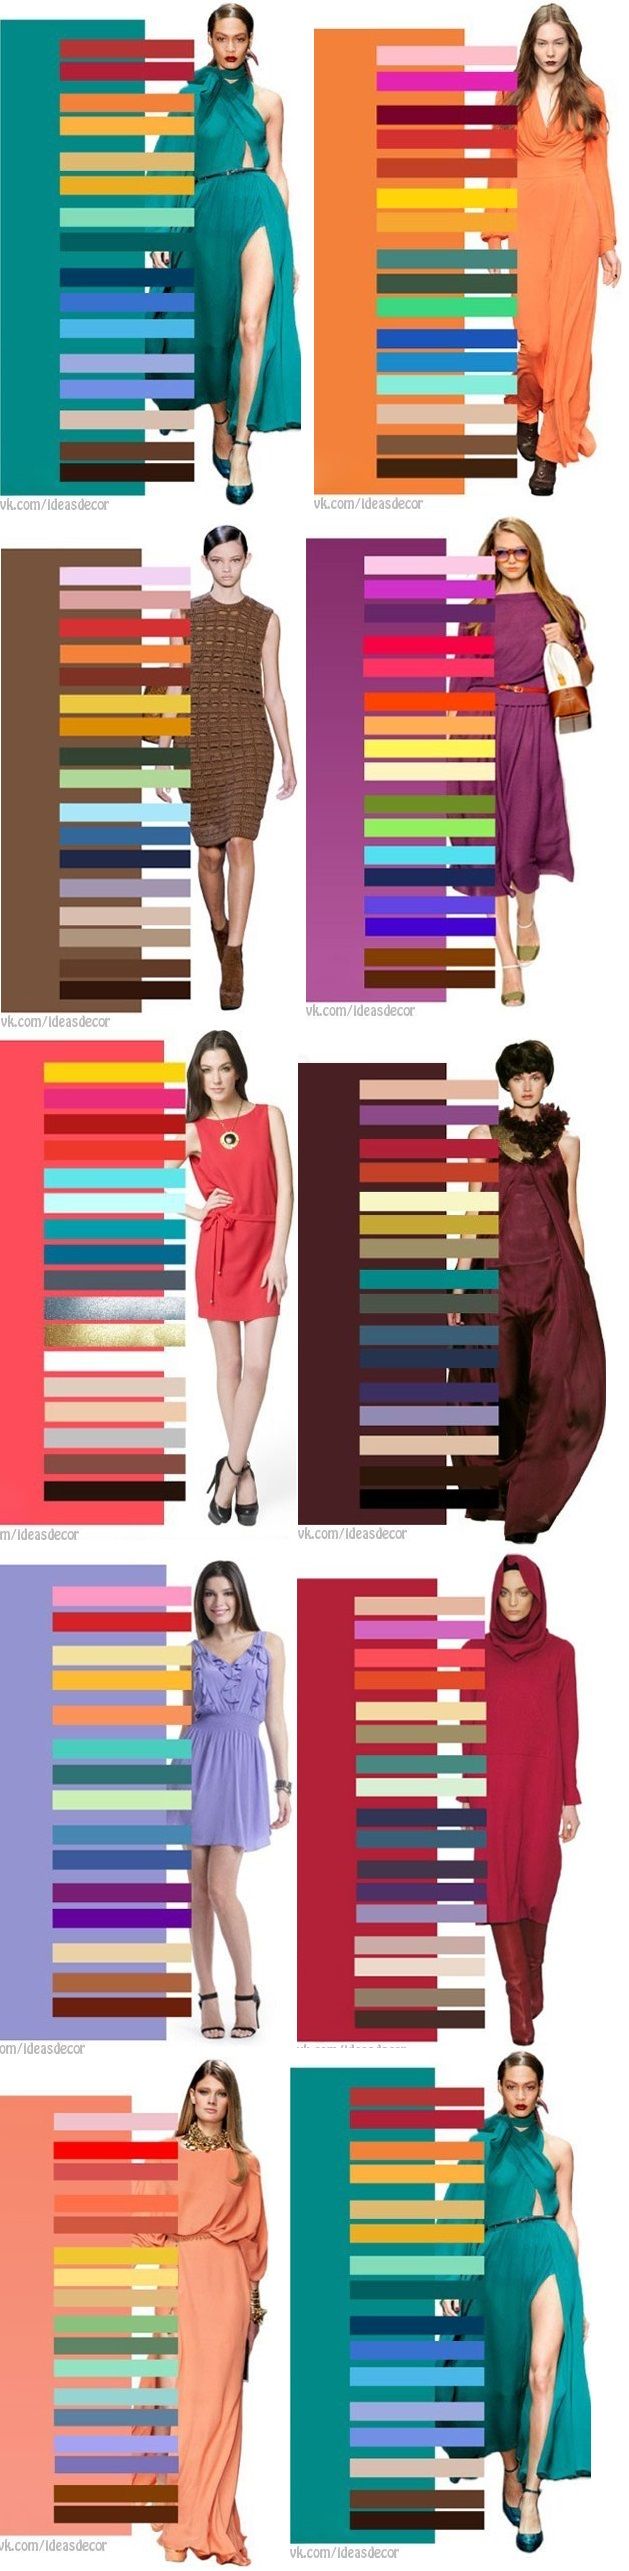 Colour combination guide